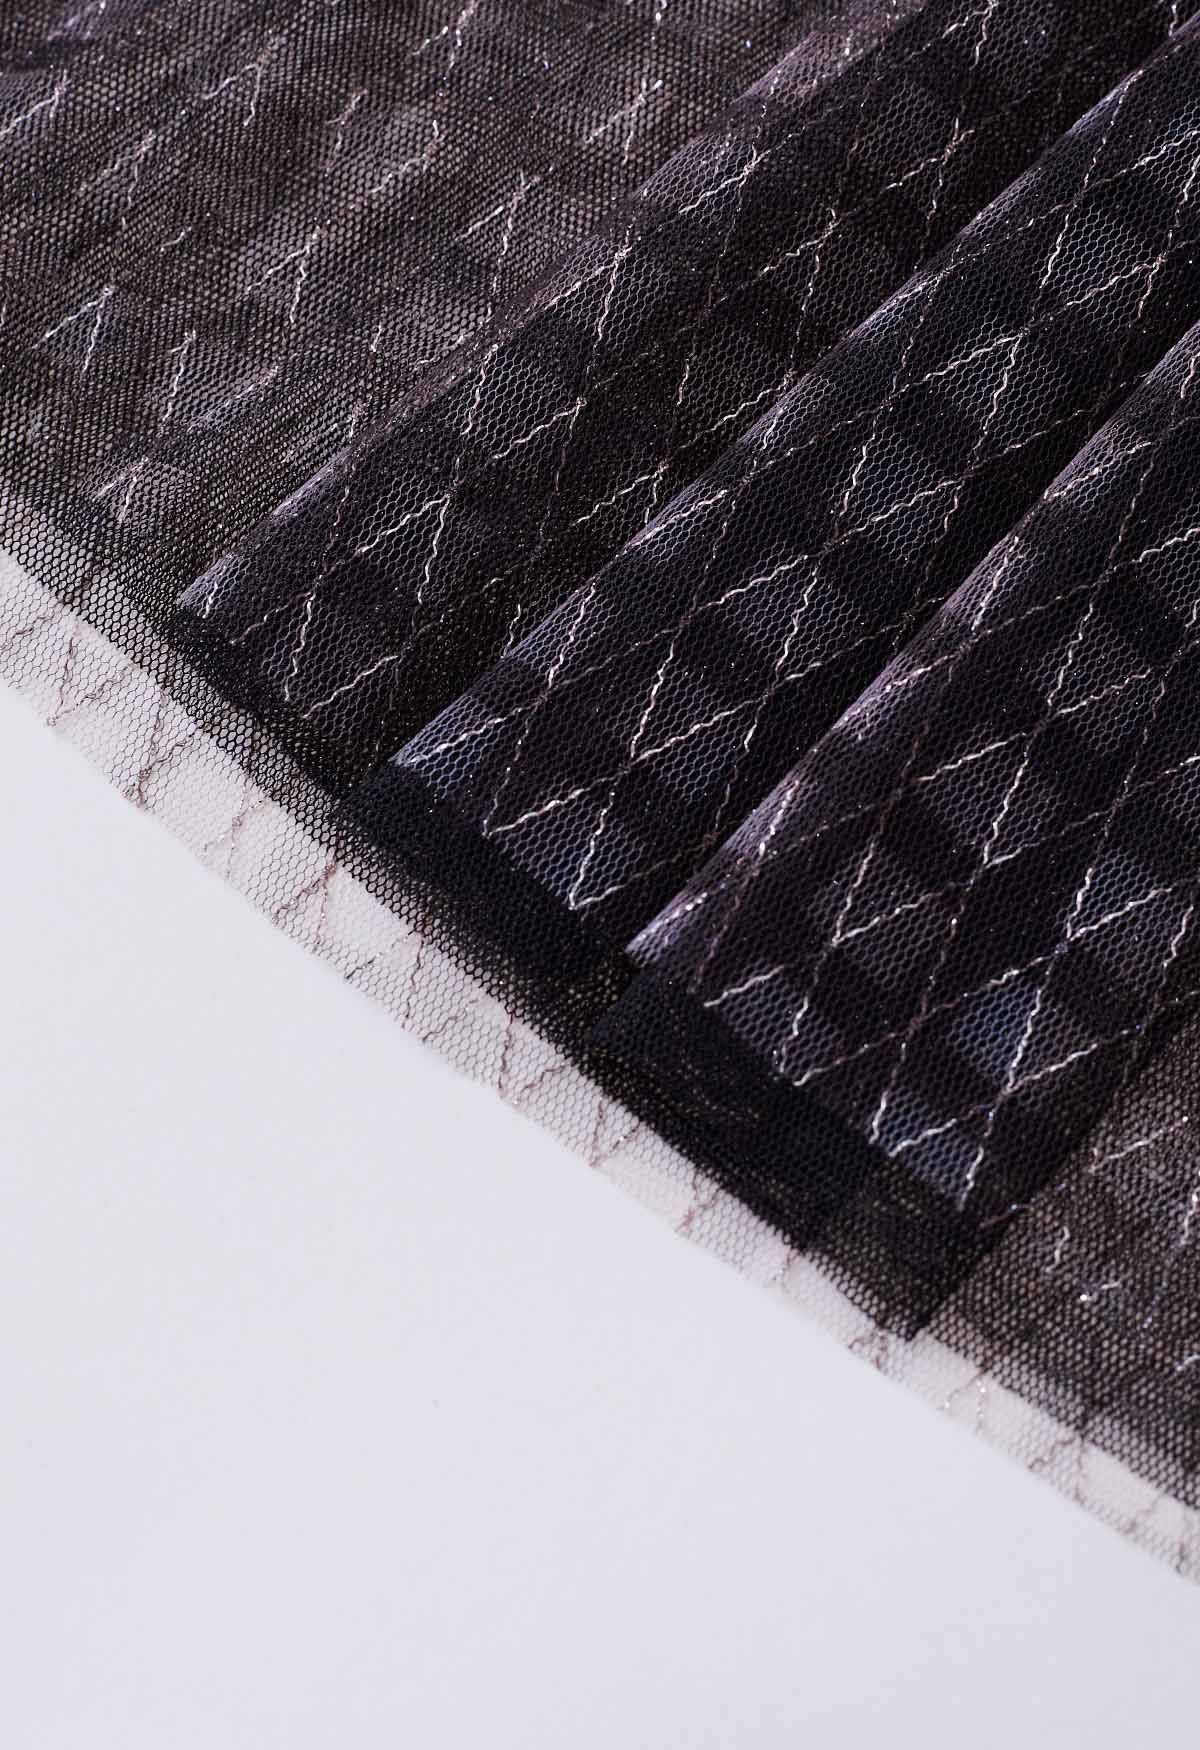 Metallic Thread Diamond-Shape Mesh Tulle Skirt in Black